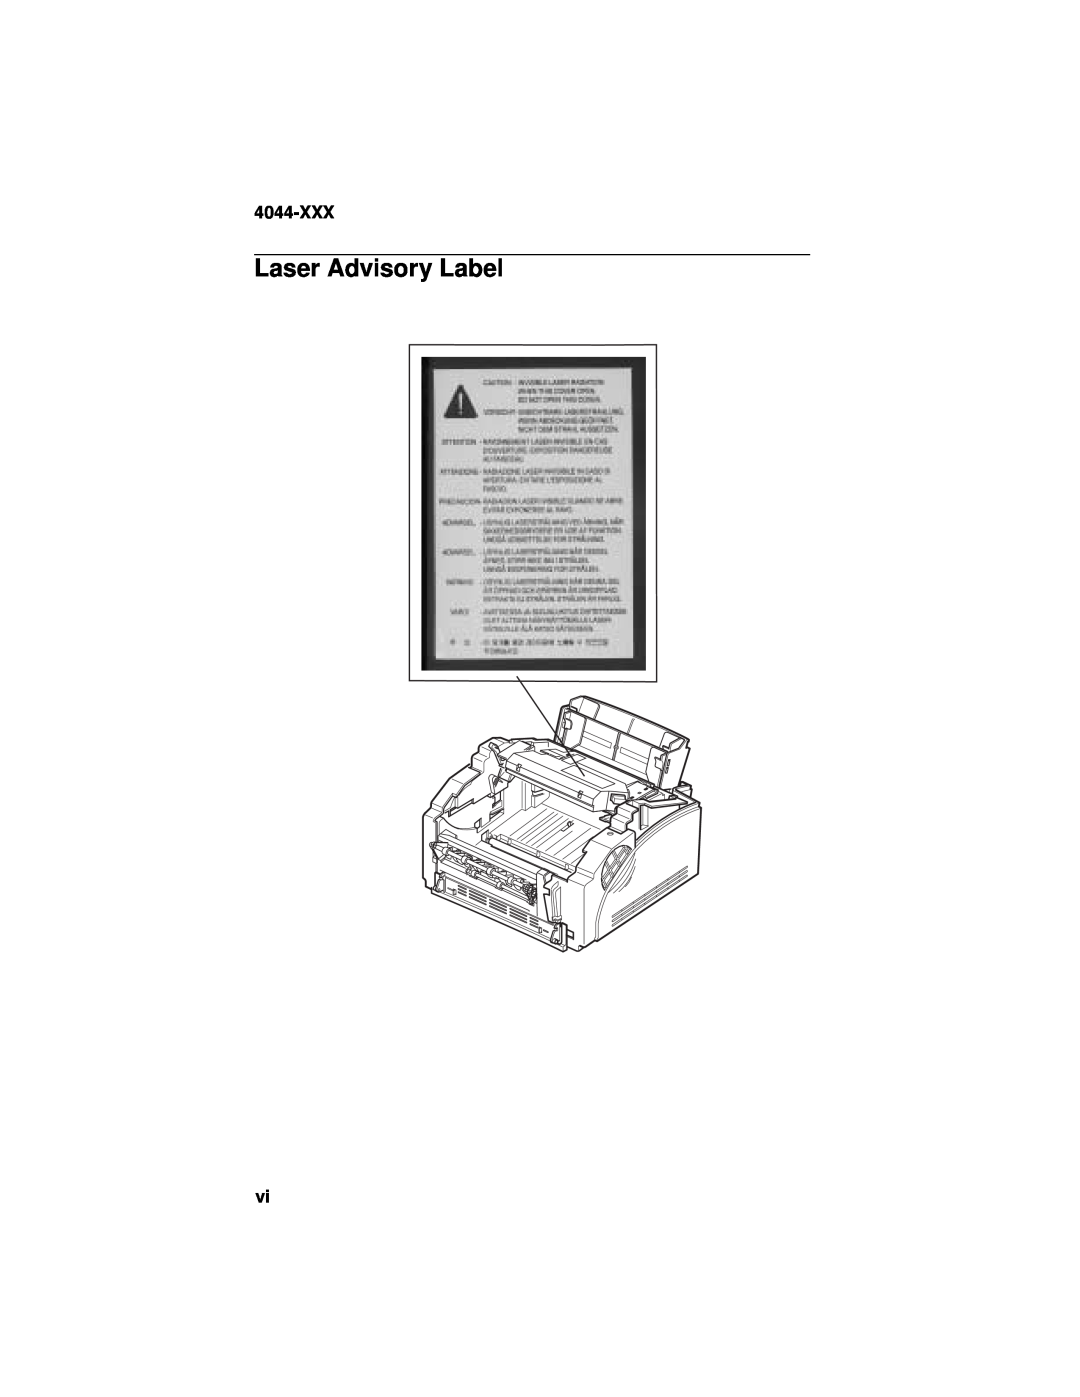 Lexmark 4044-XXX, E310 manual Laser Advisory Label 